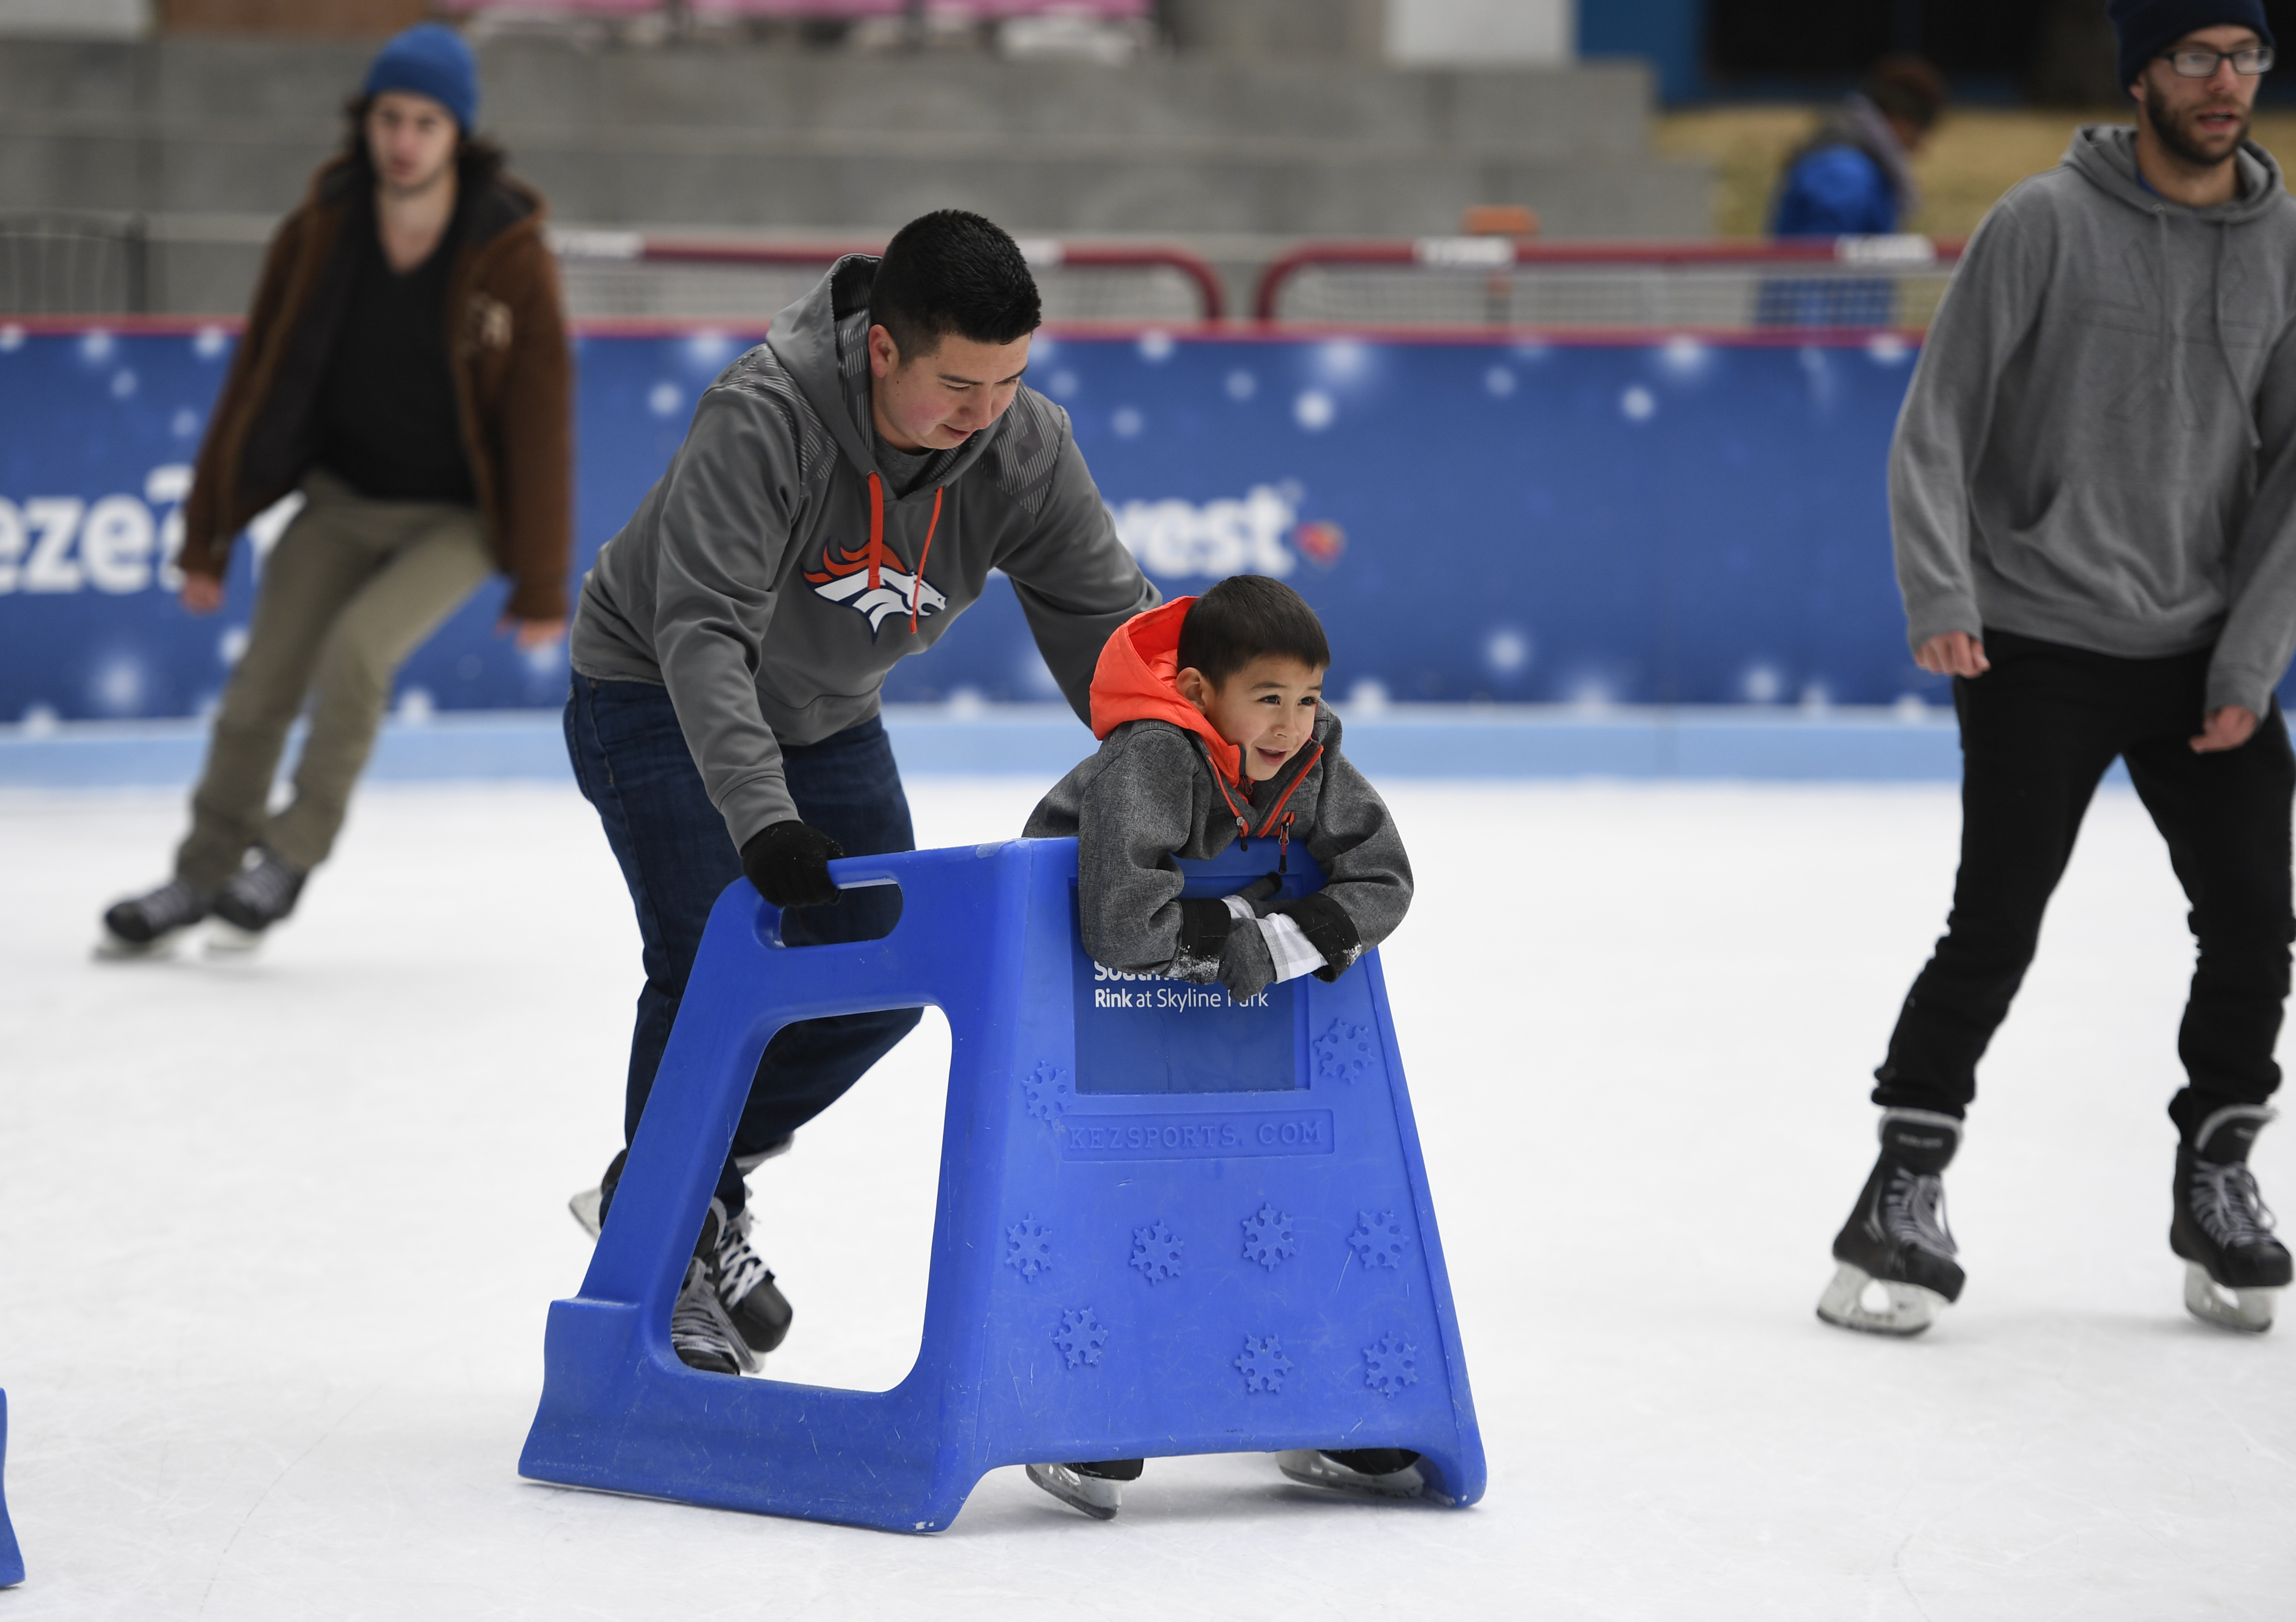 Enjoy these three fun pop-up ice skating rinks in metro Denver